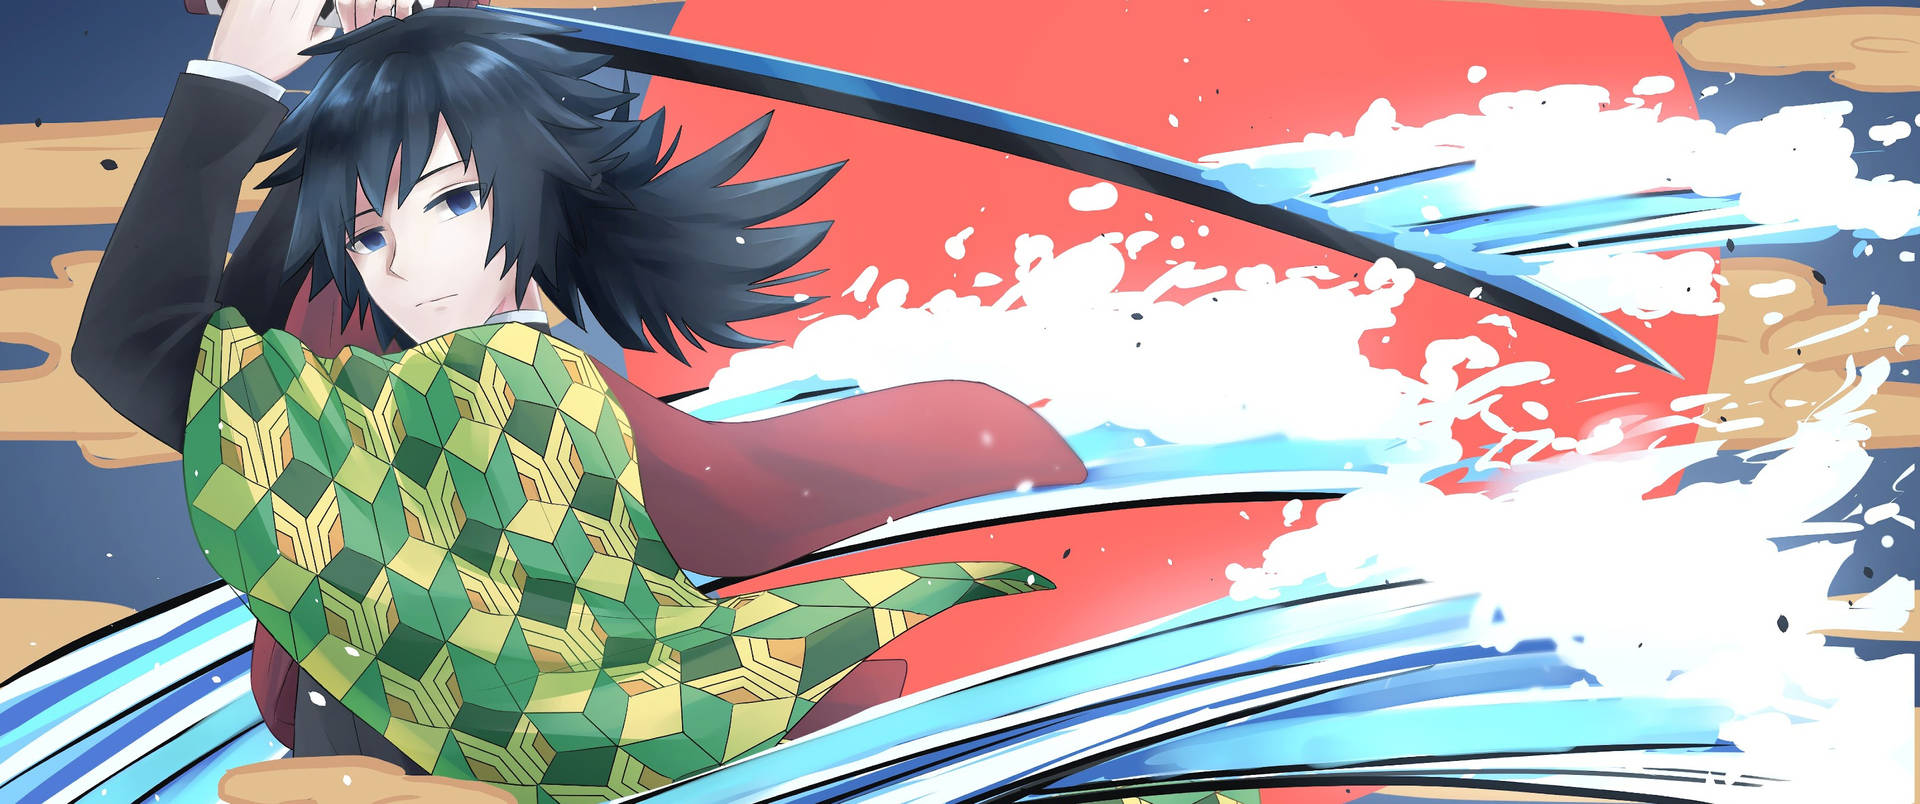 Captivating Image Of Giyu Tomioka As A Sharp-edged Samurai